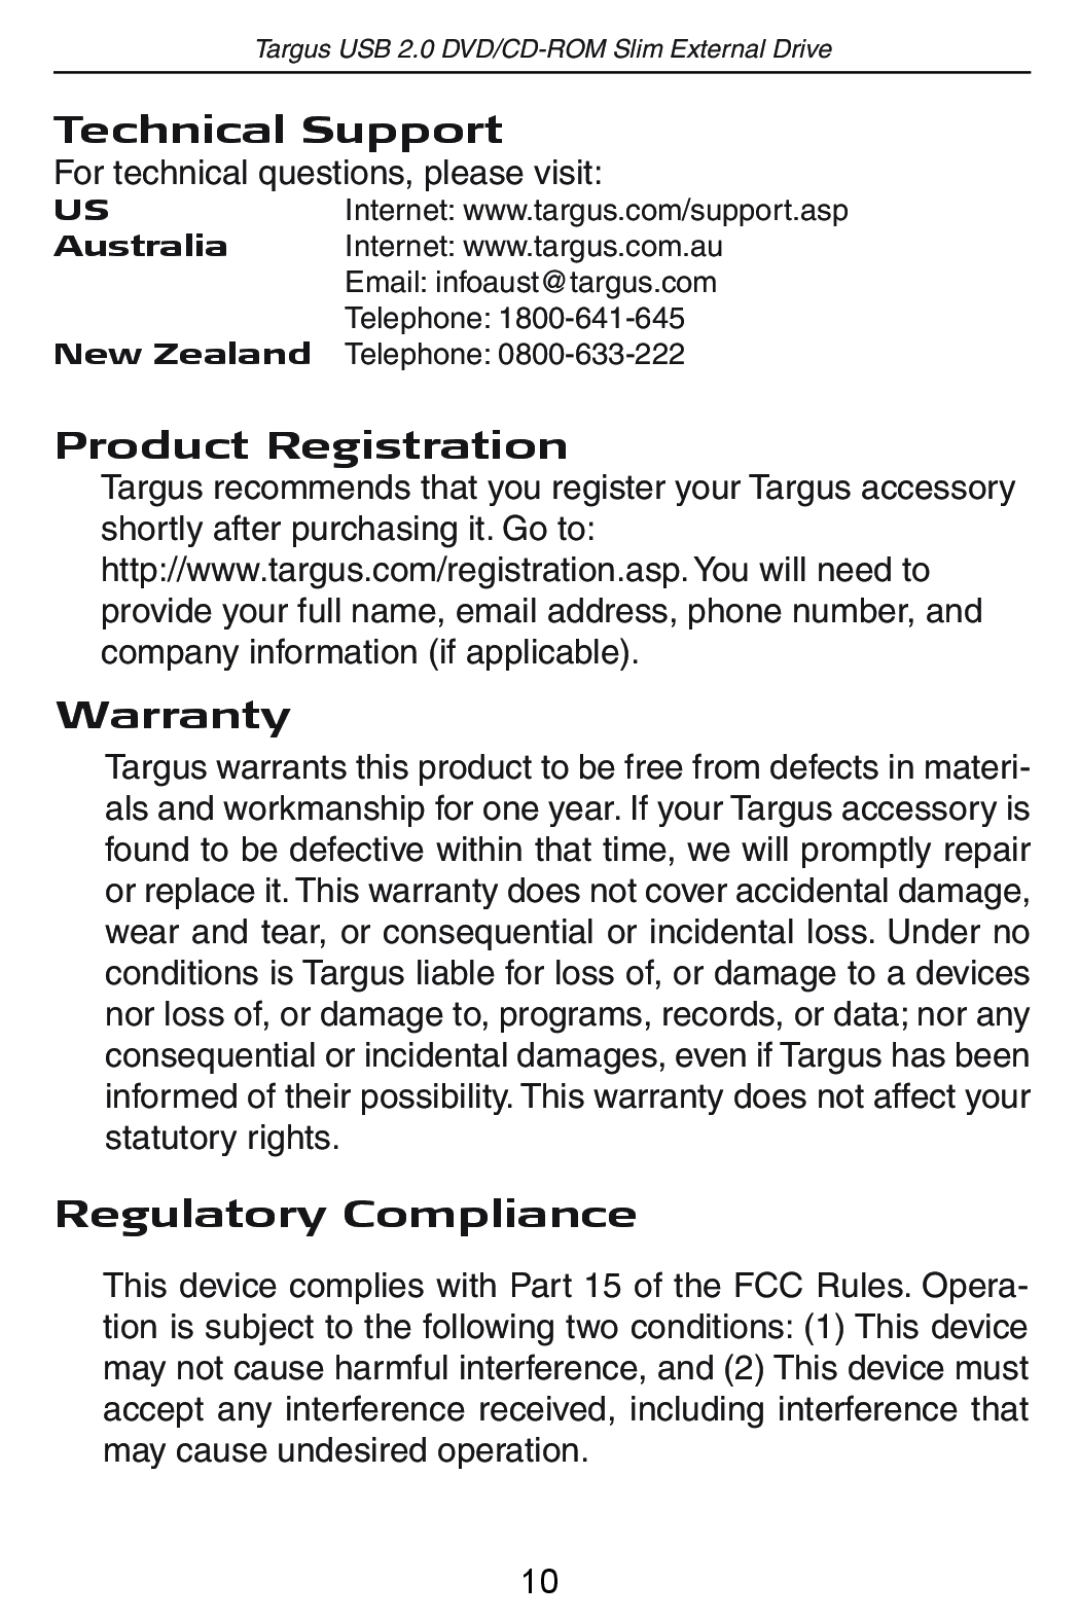 Targus USB 2.0 DVD/CD-ROM Slim External Drive Technical Support, Product Registration, Warranty, Regulatory Compliance 